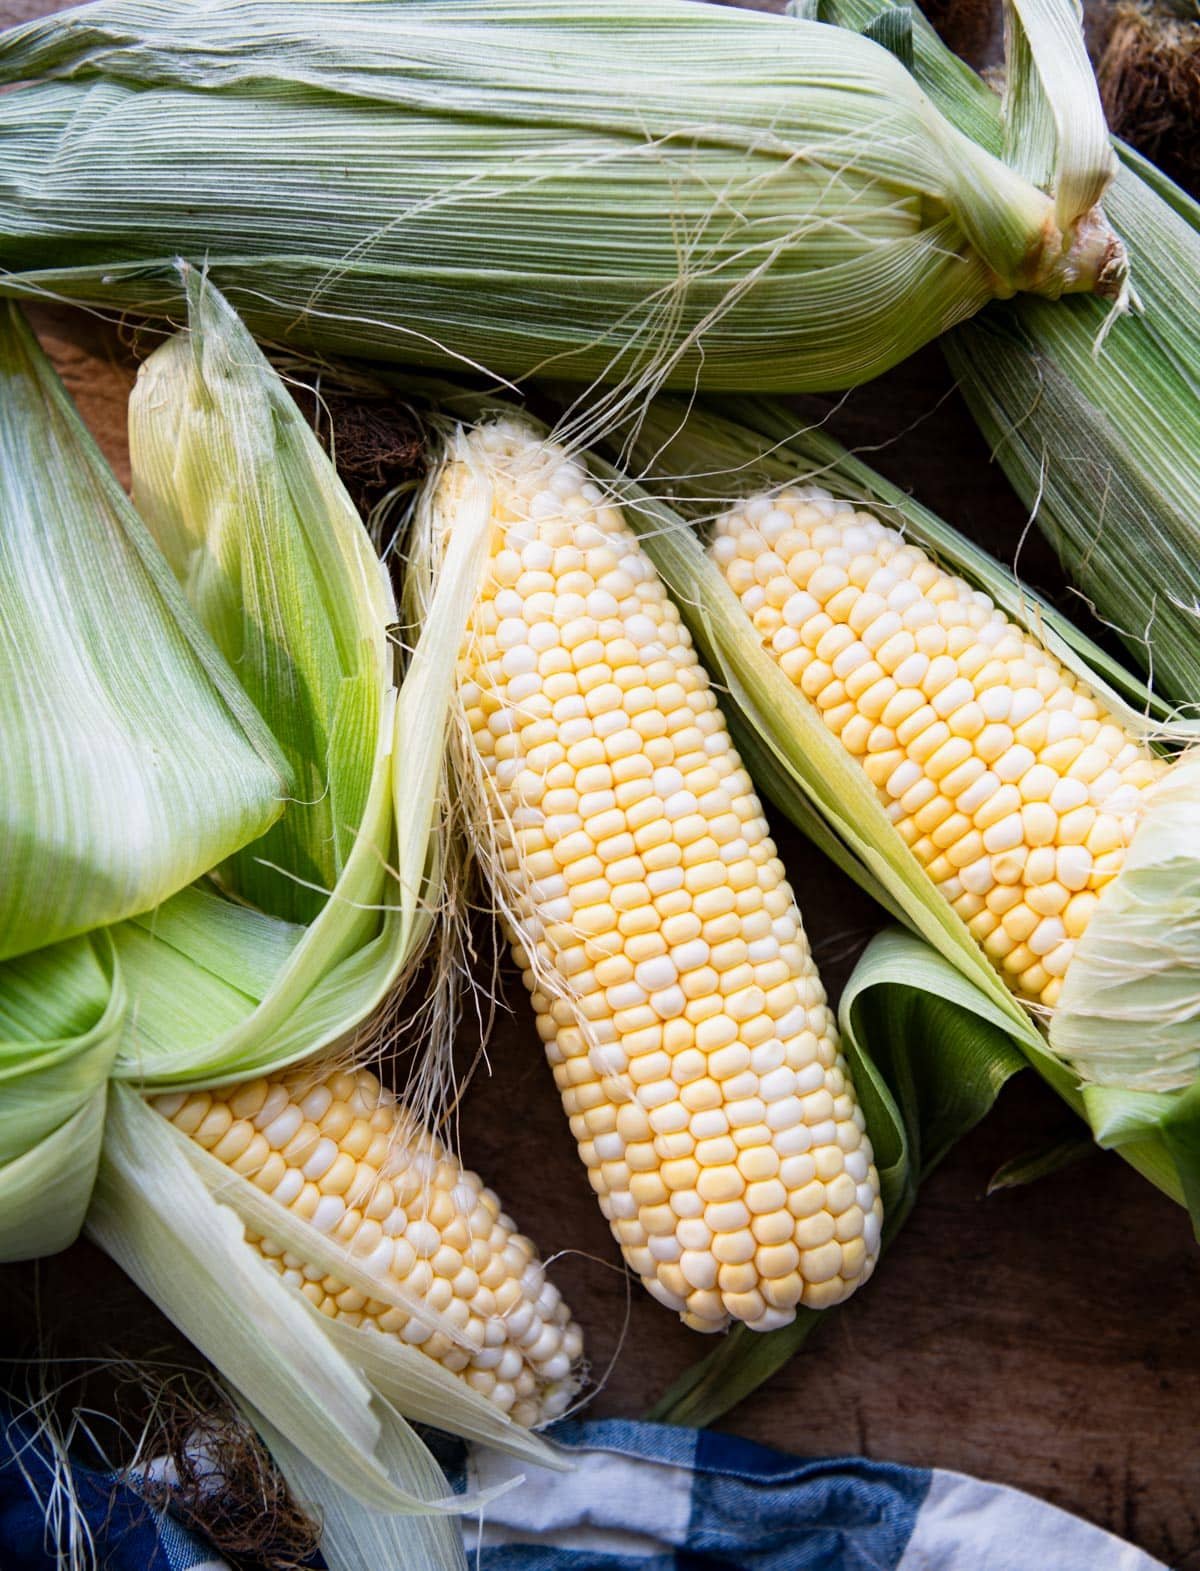 Ears of fresh corn.